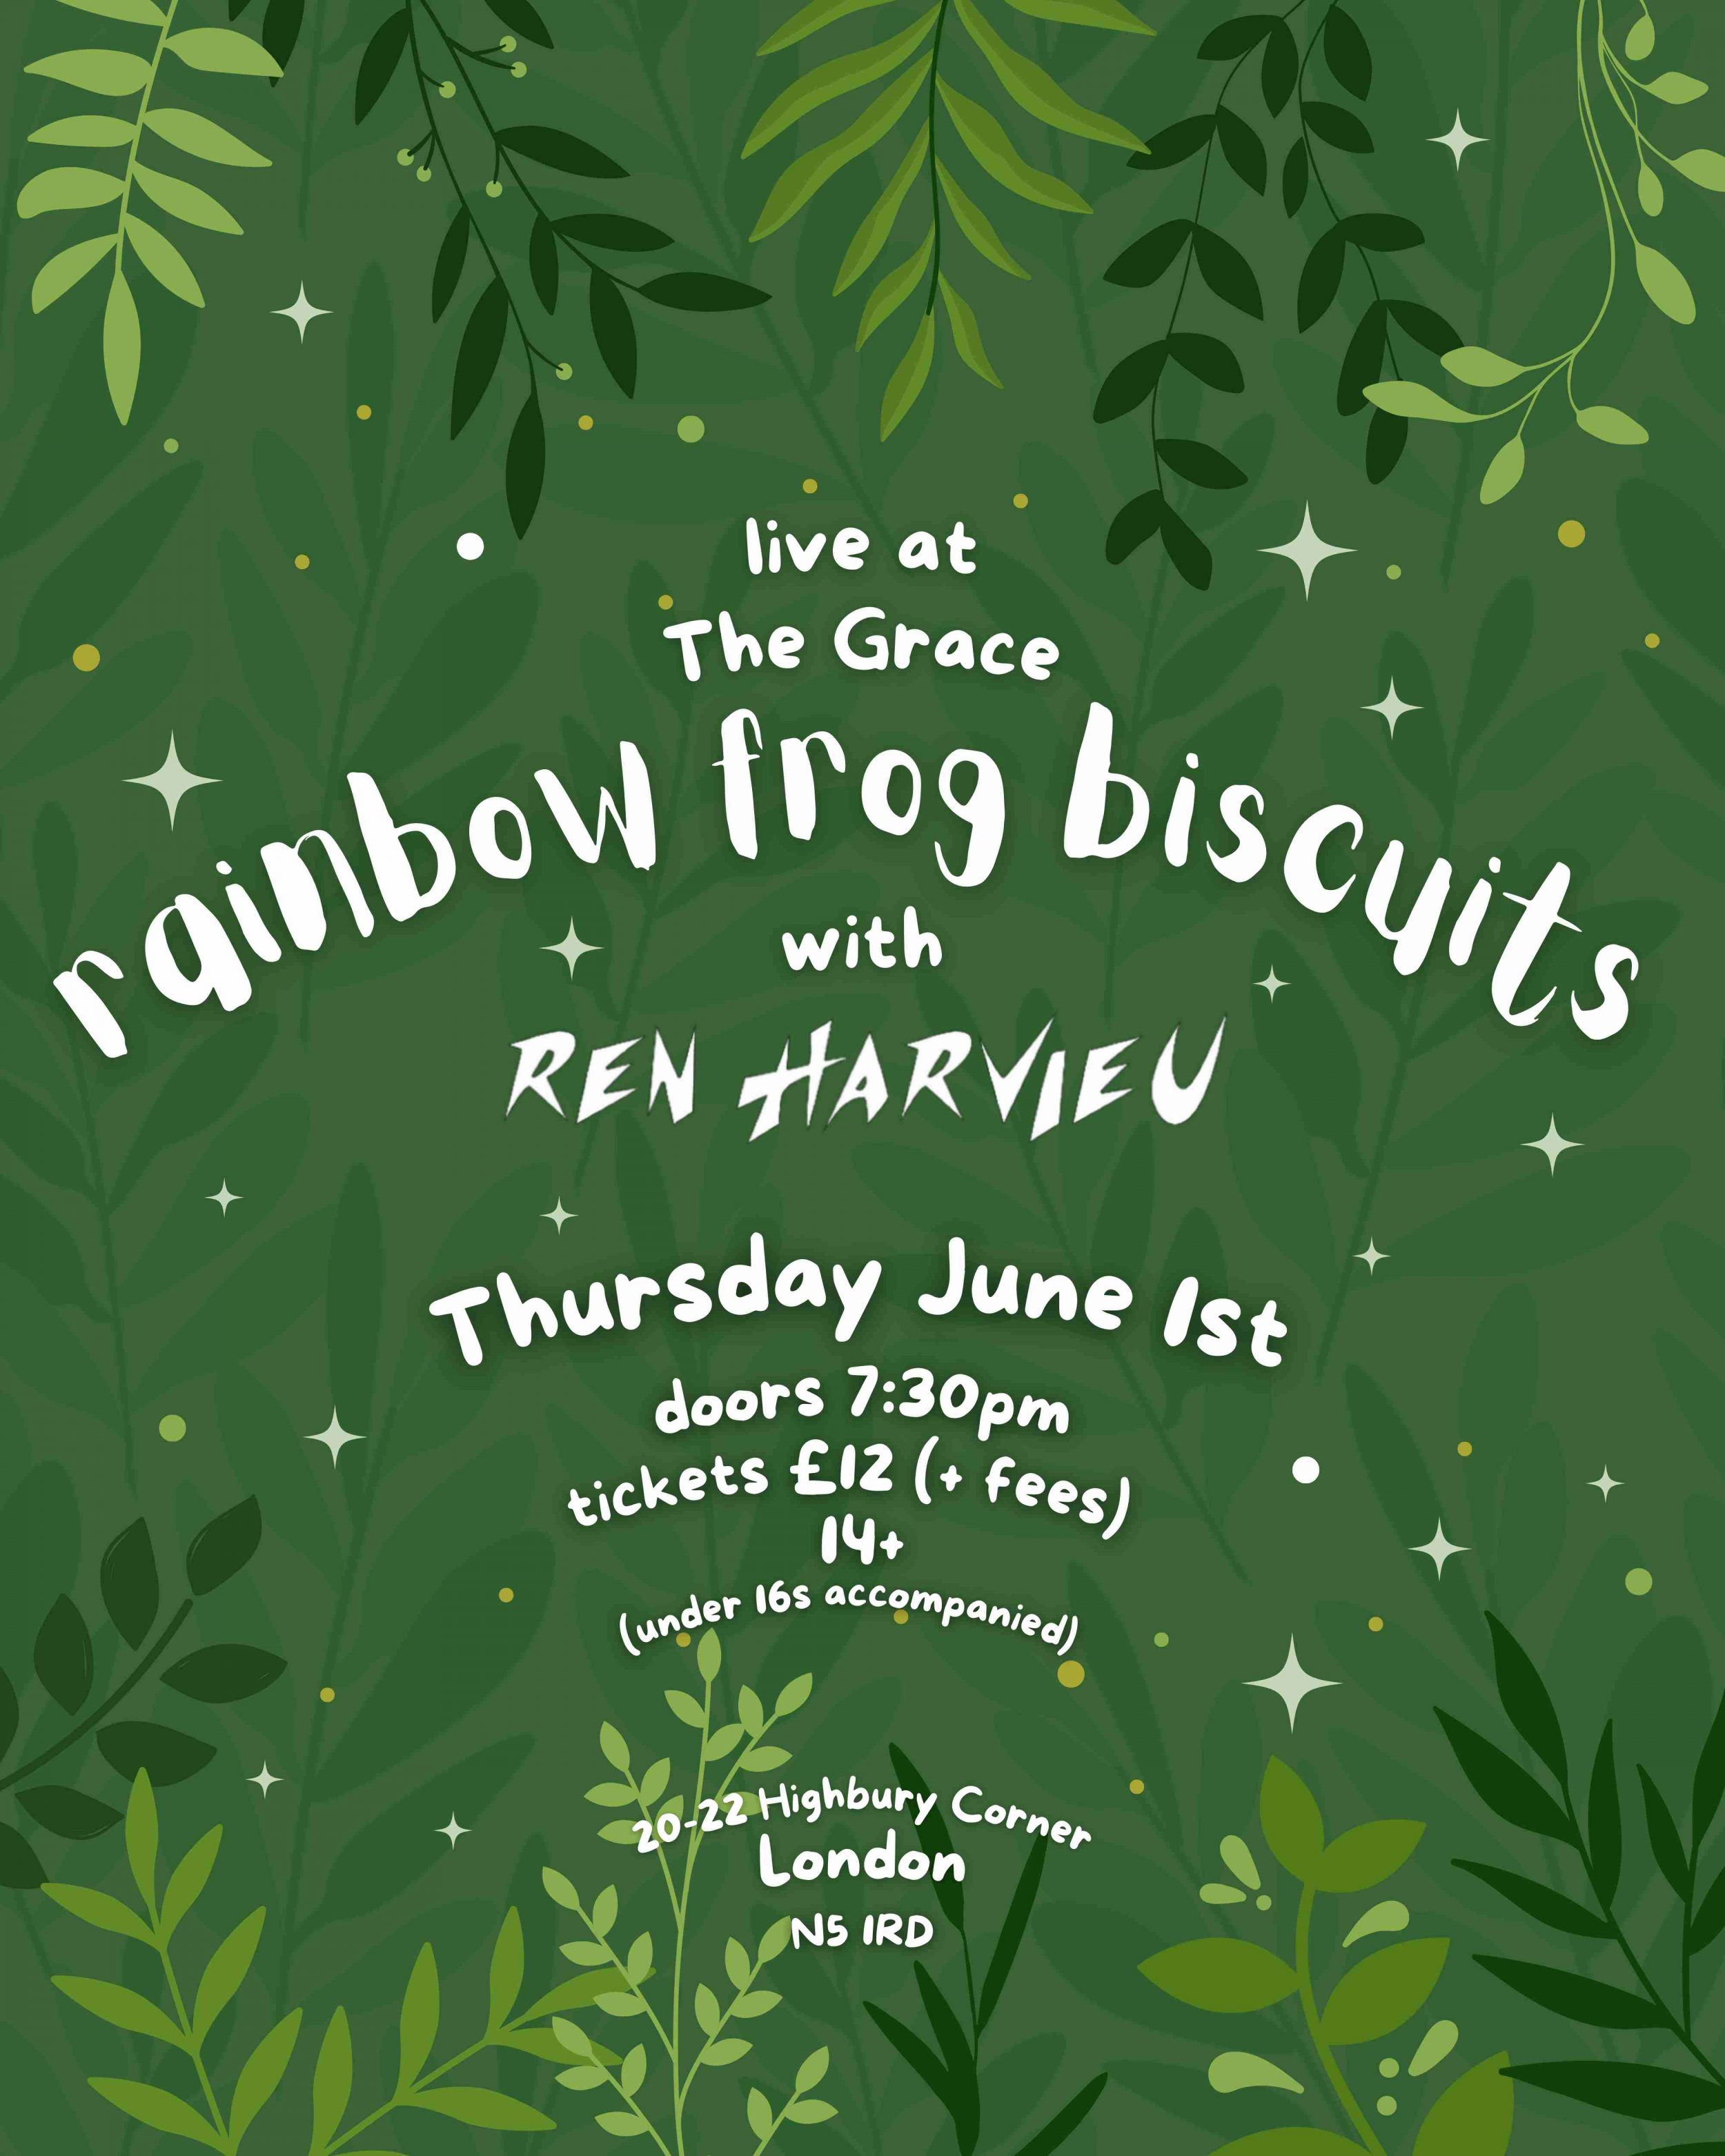 Rainbow Frog Biscuits Poster